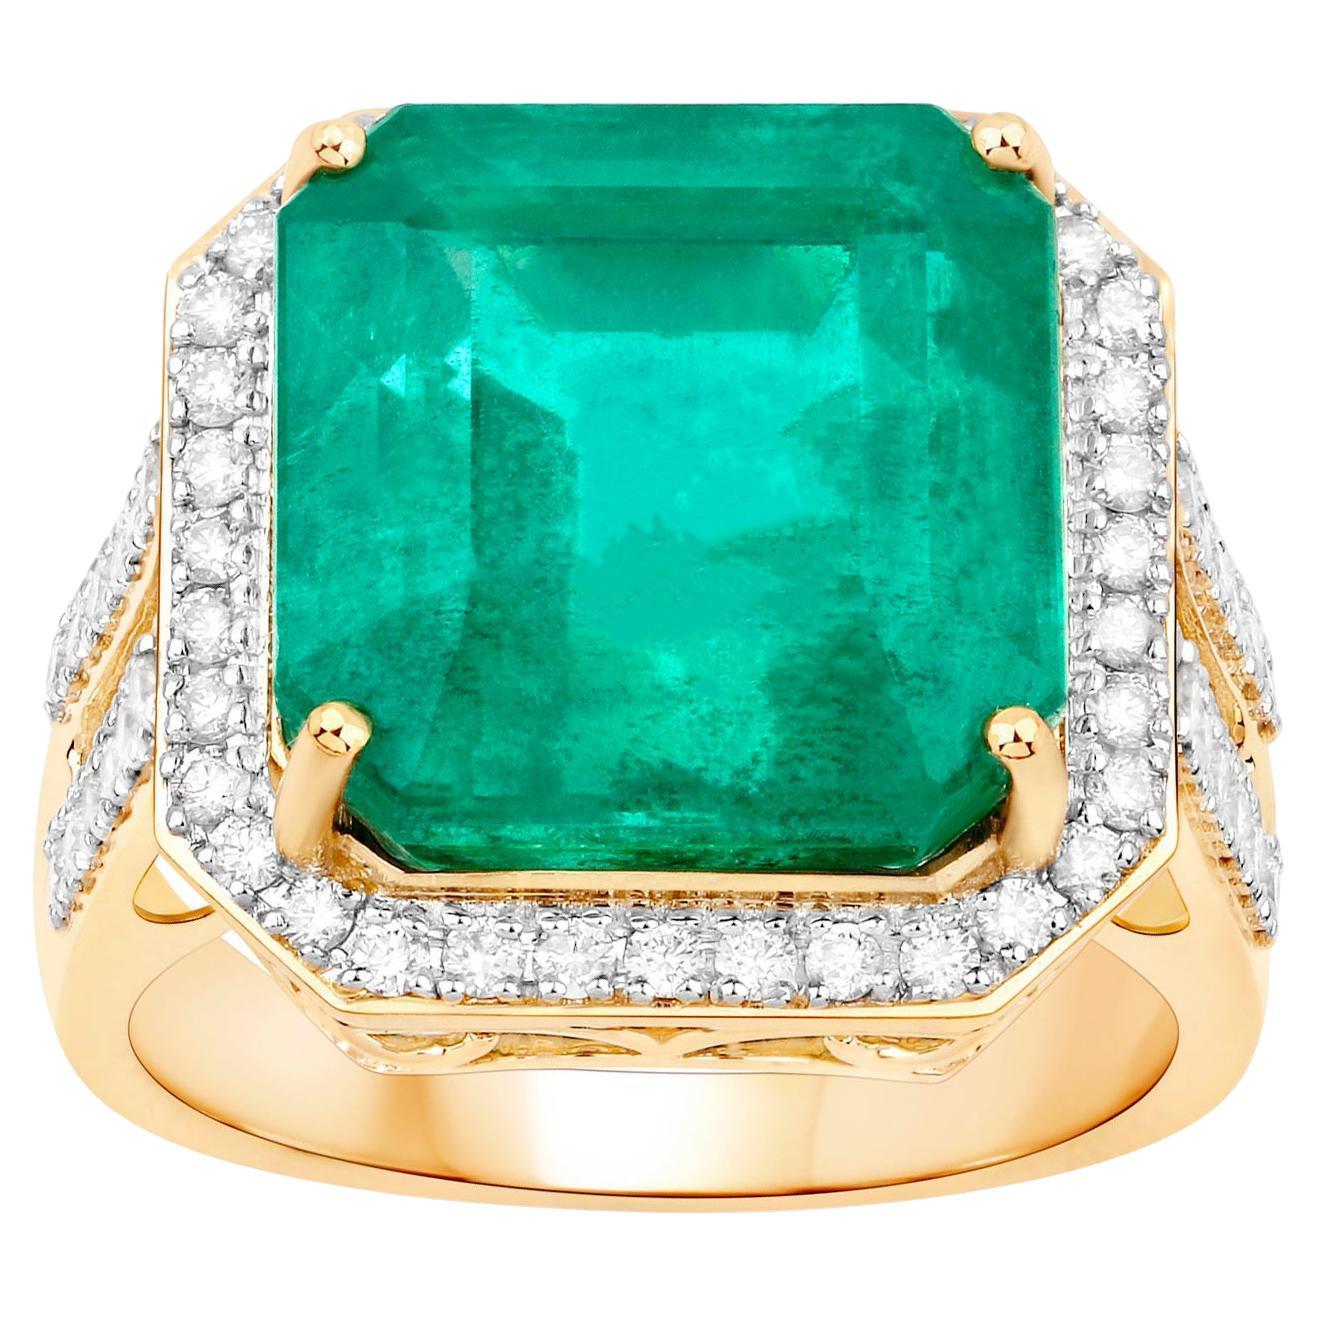 IGI Certified Zambian Emerald Ring With Diamonds 13.06 Carats 14K Yellow Gold